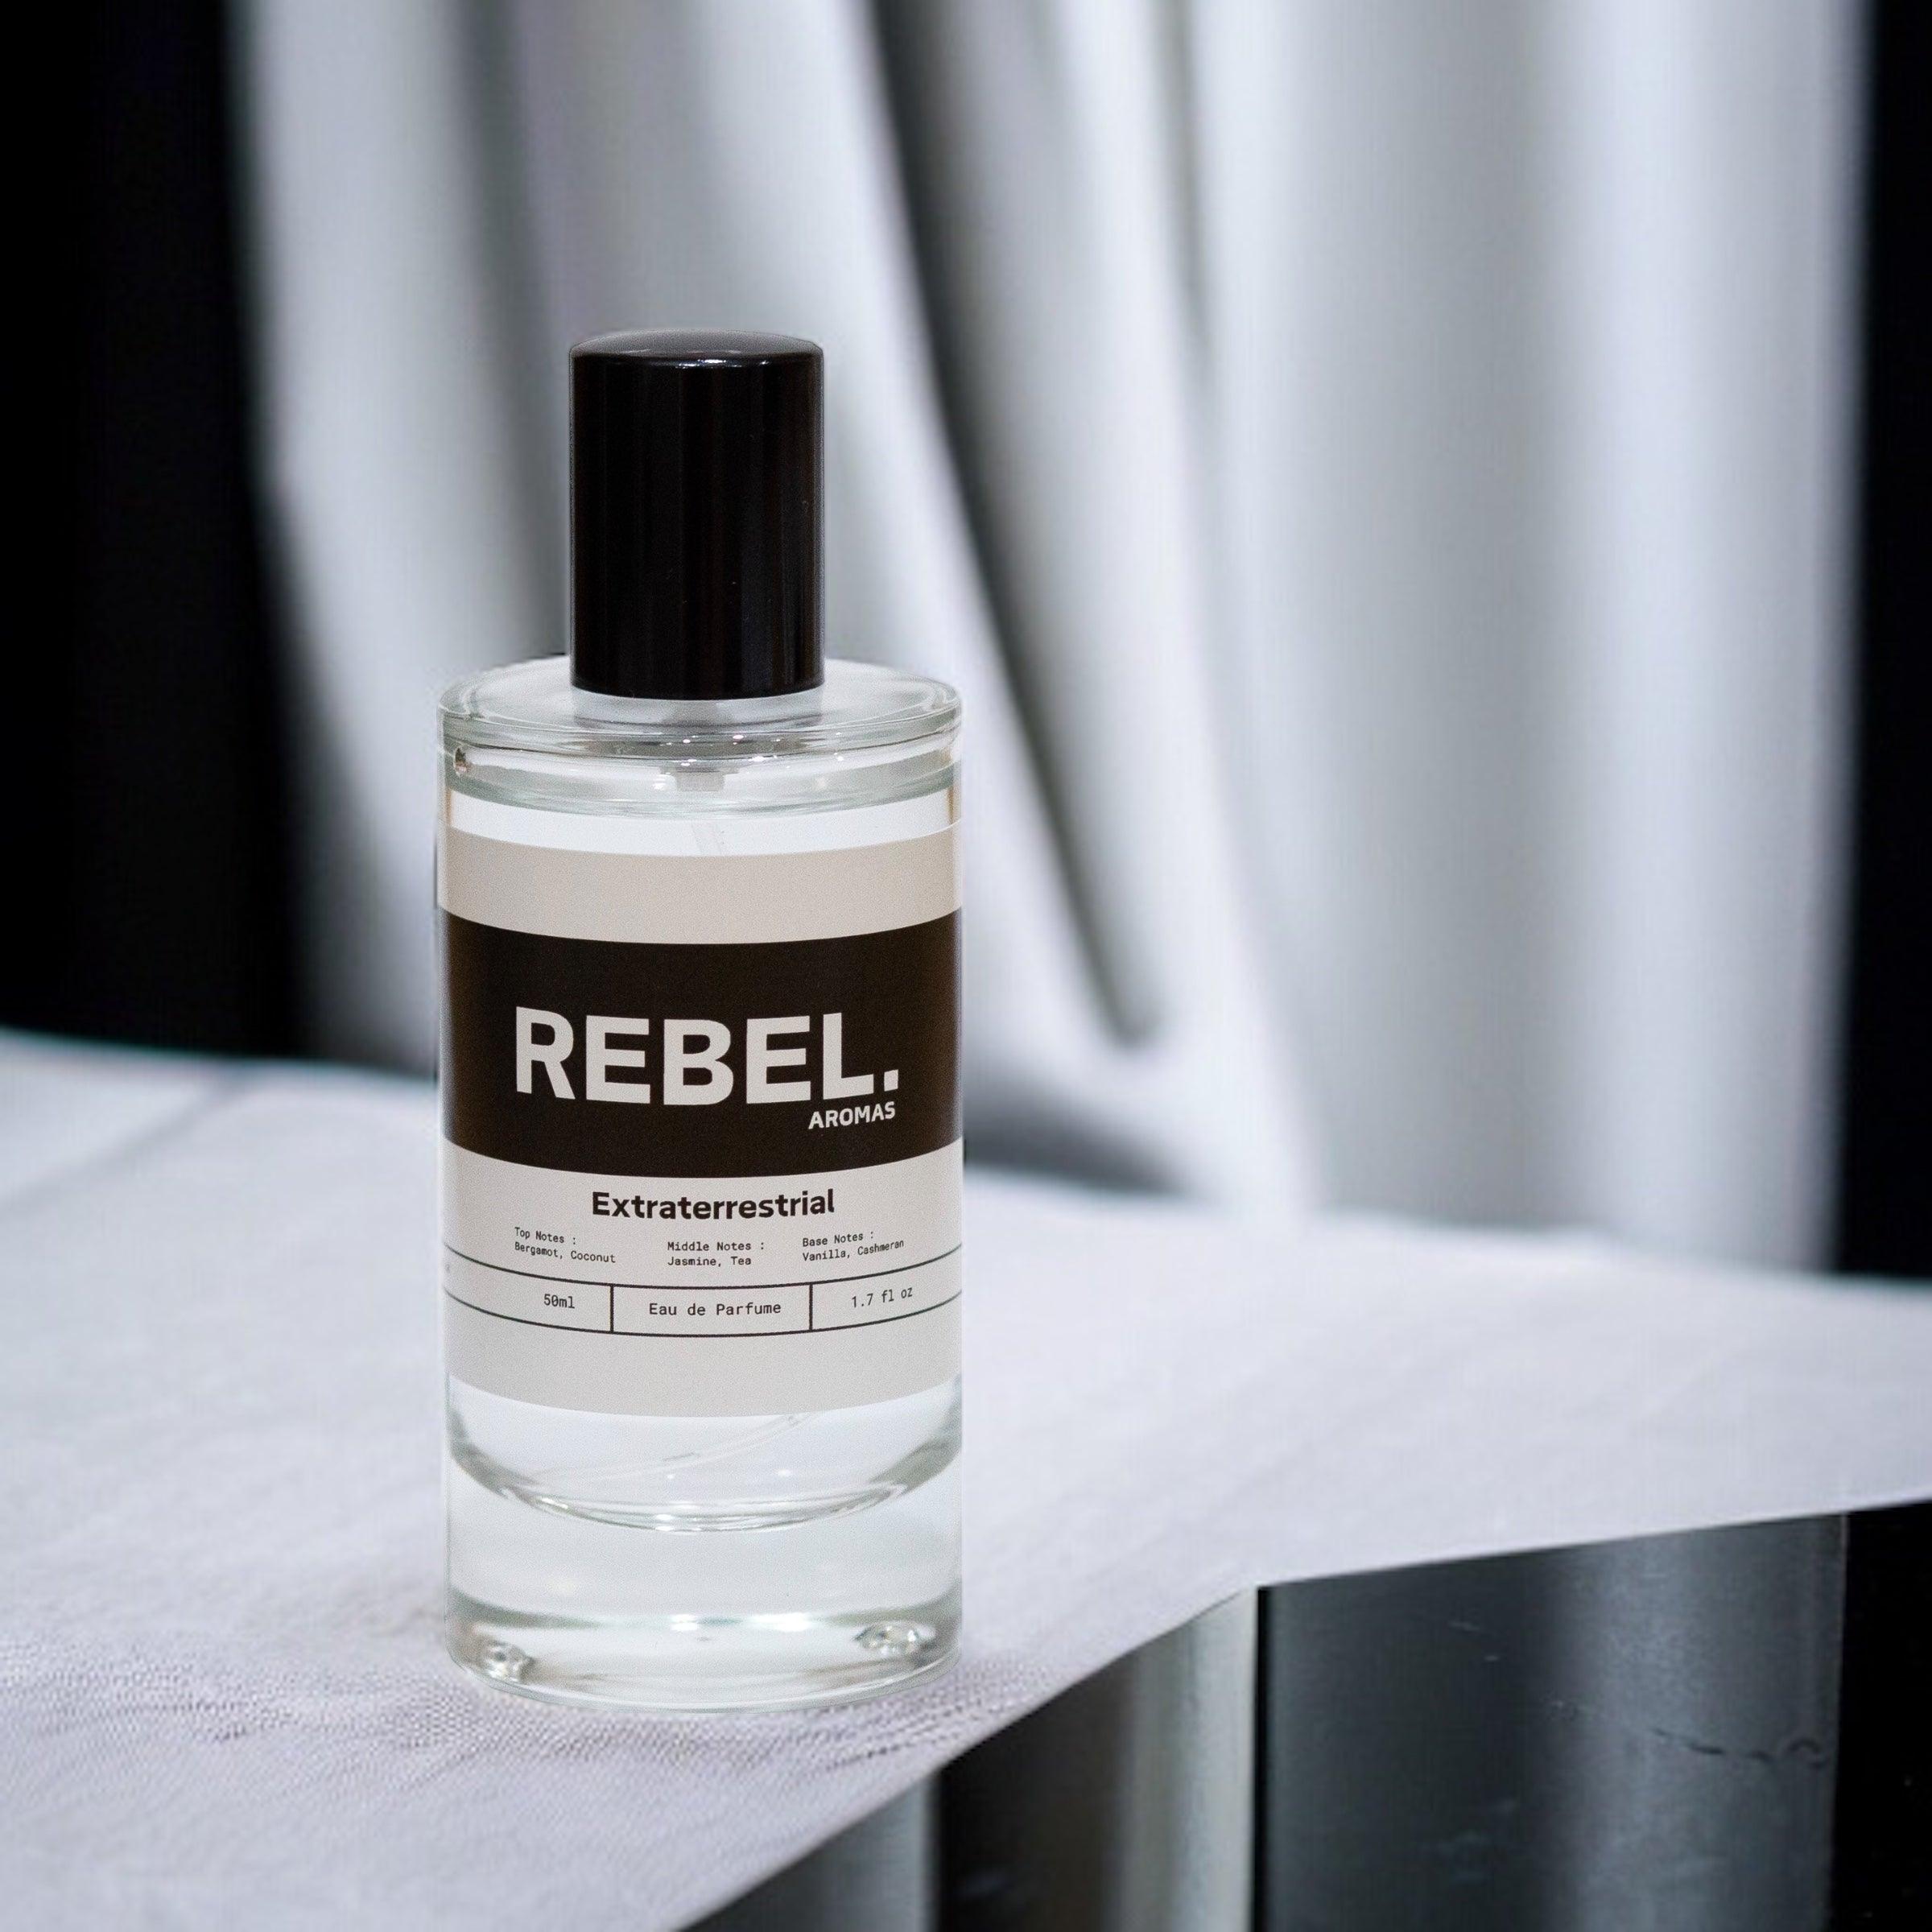 Extraterrestrial - Rebel Aromas alien dupe perfume